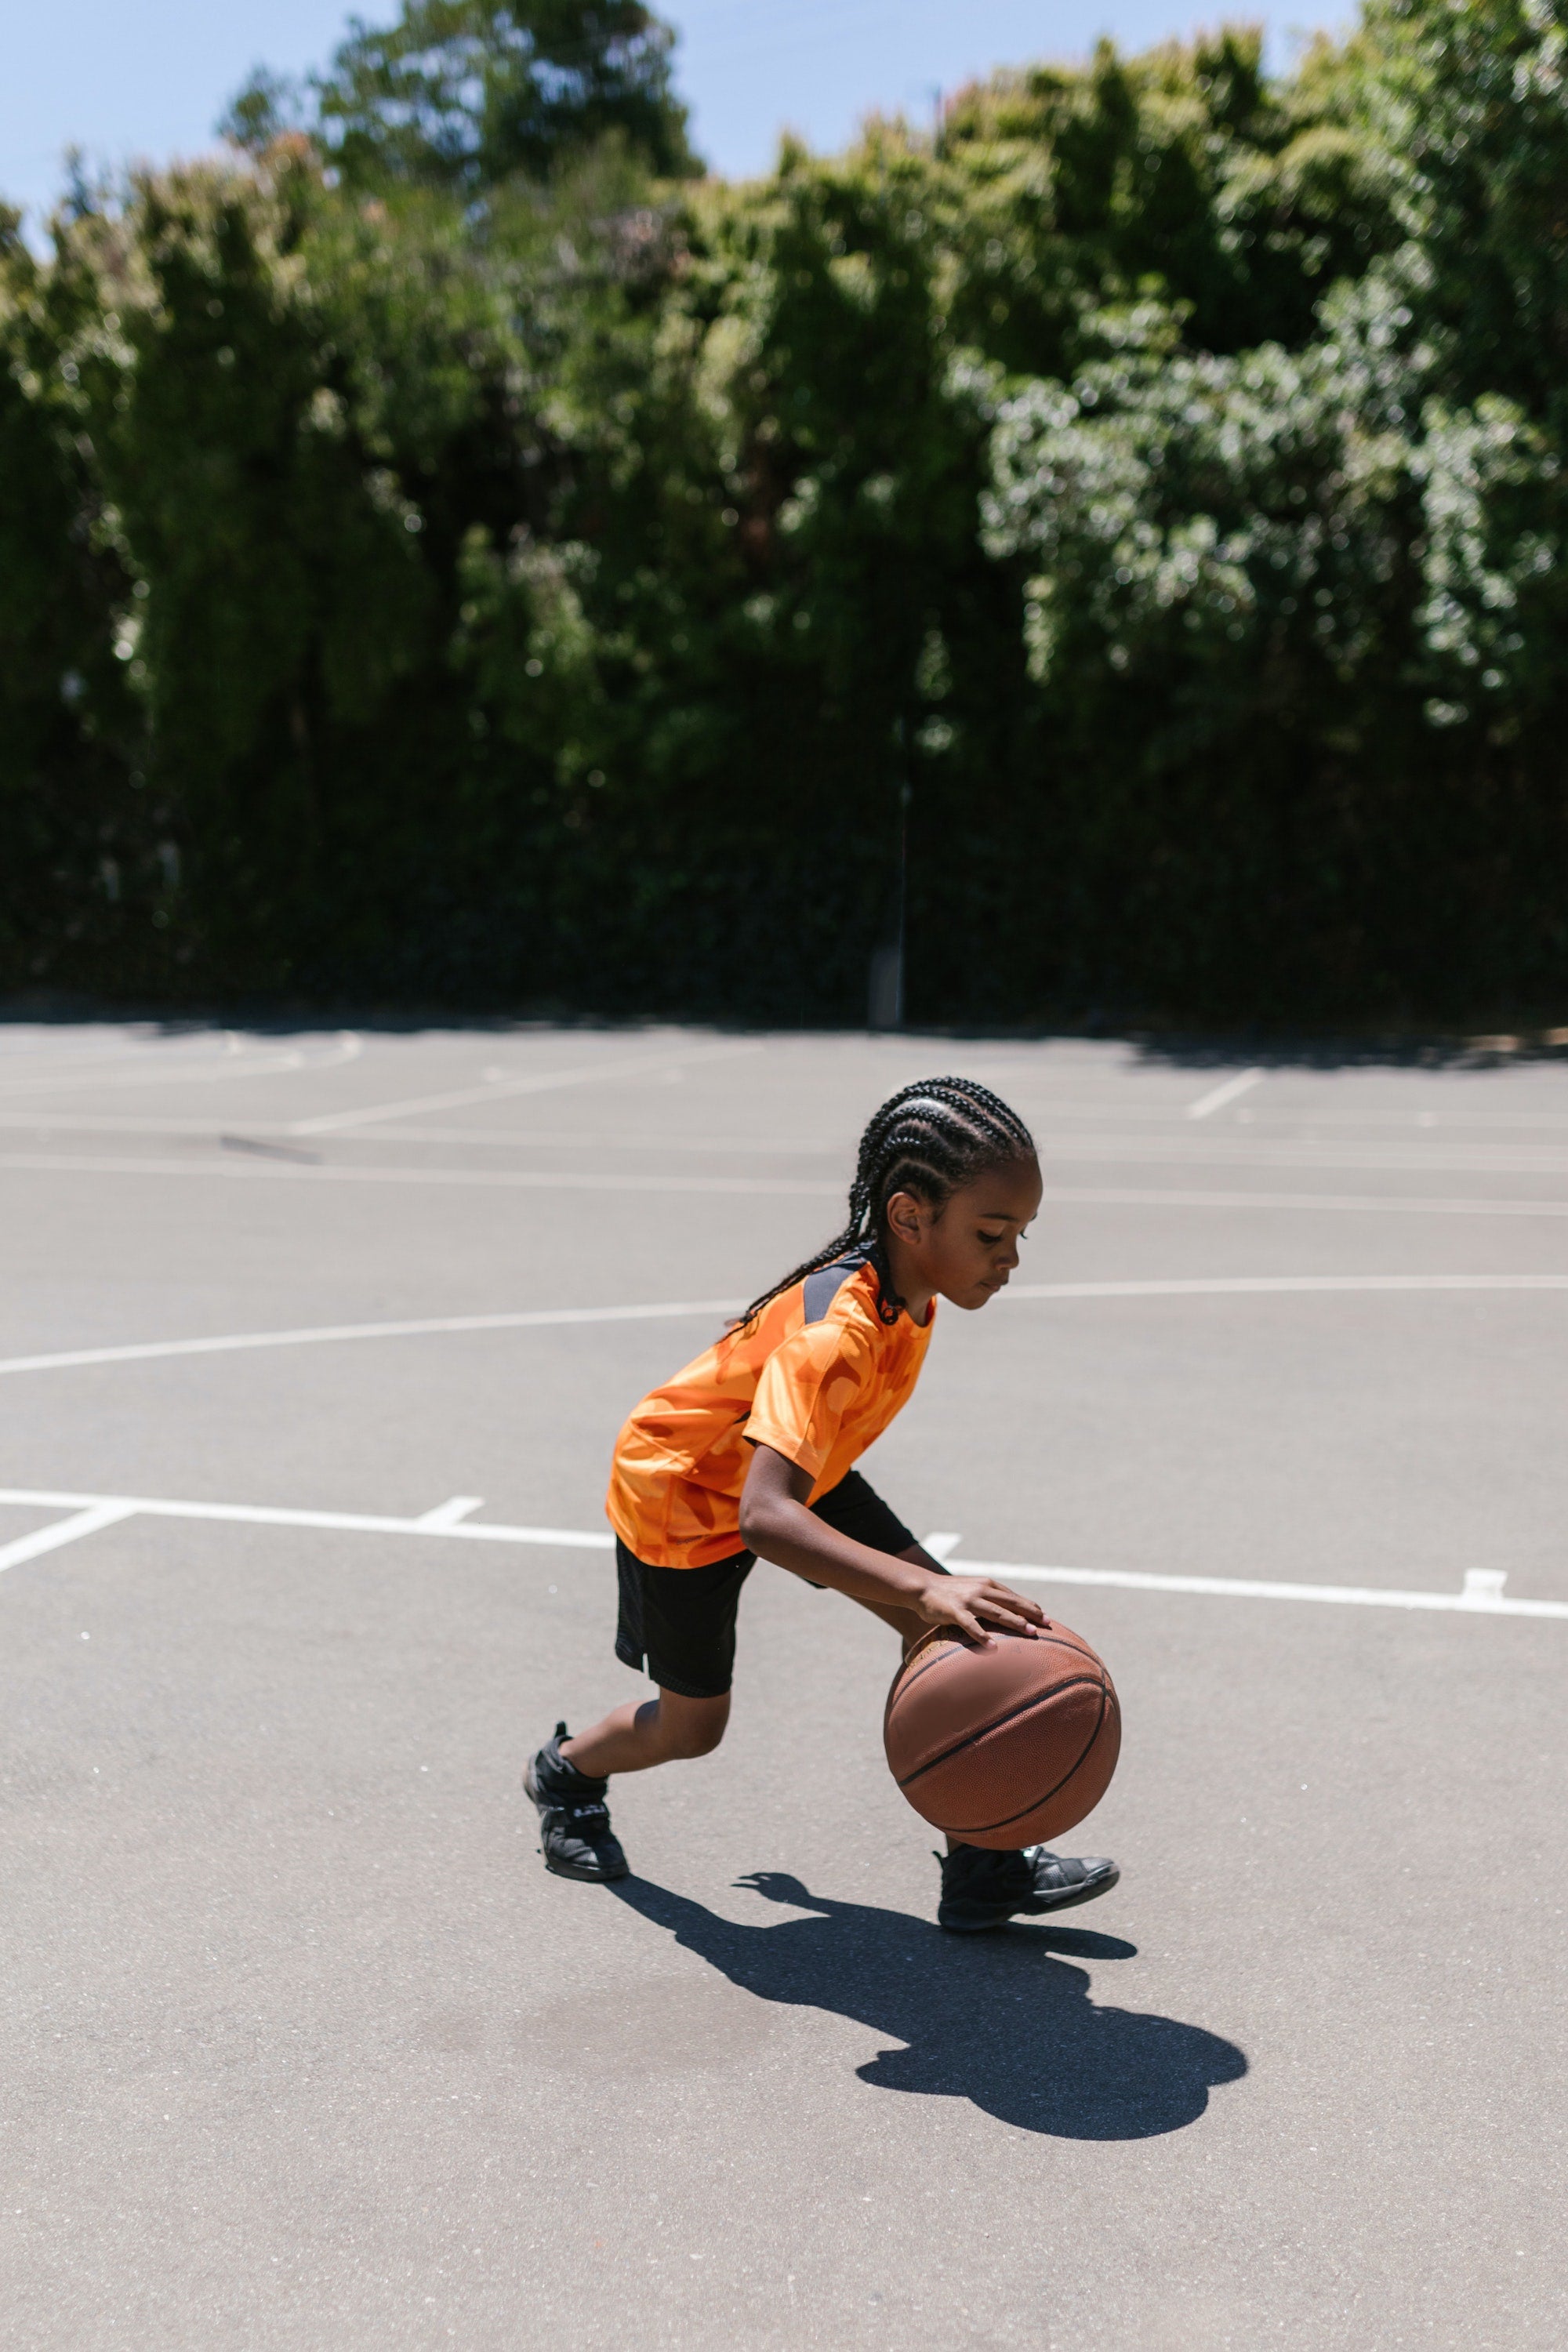 Child dribbling a basketball